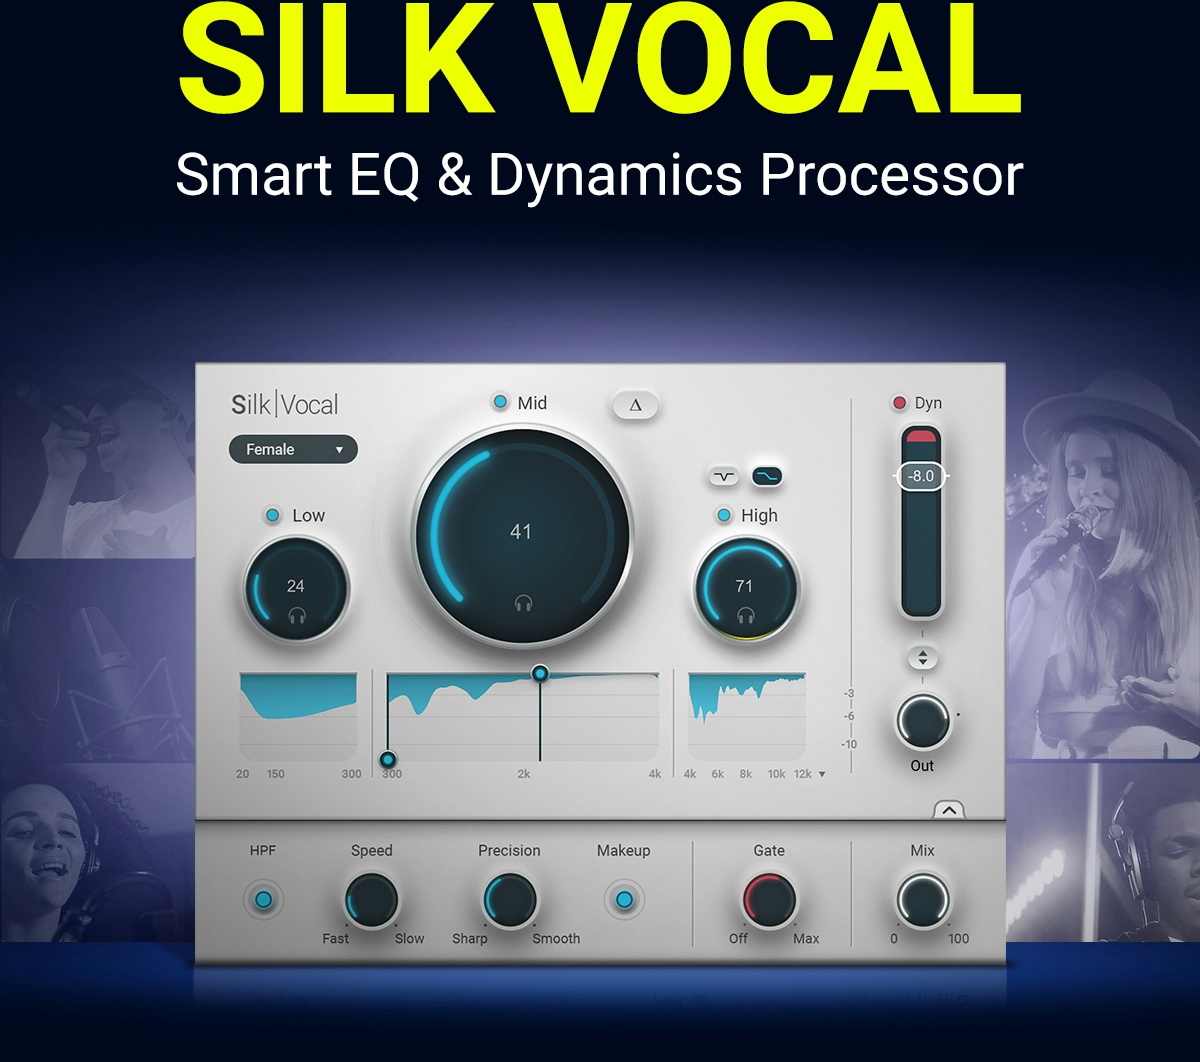 Silk Vocal – Smart EQ & Dynamics Processor FREE during Black Friday